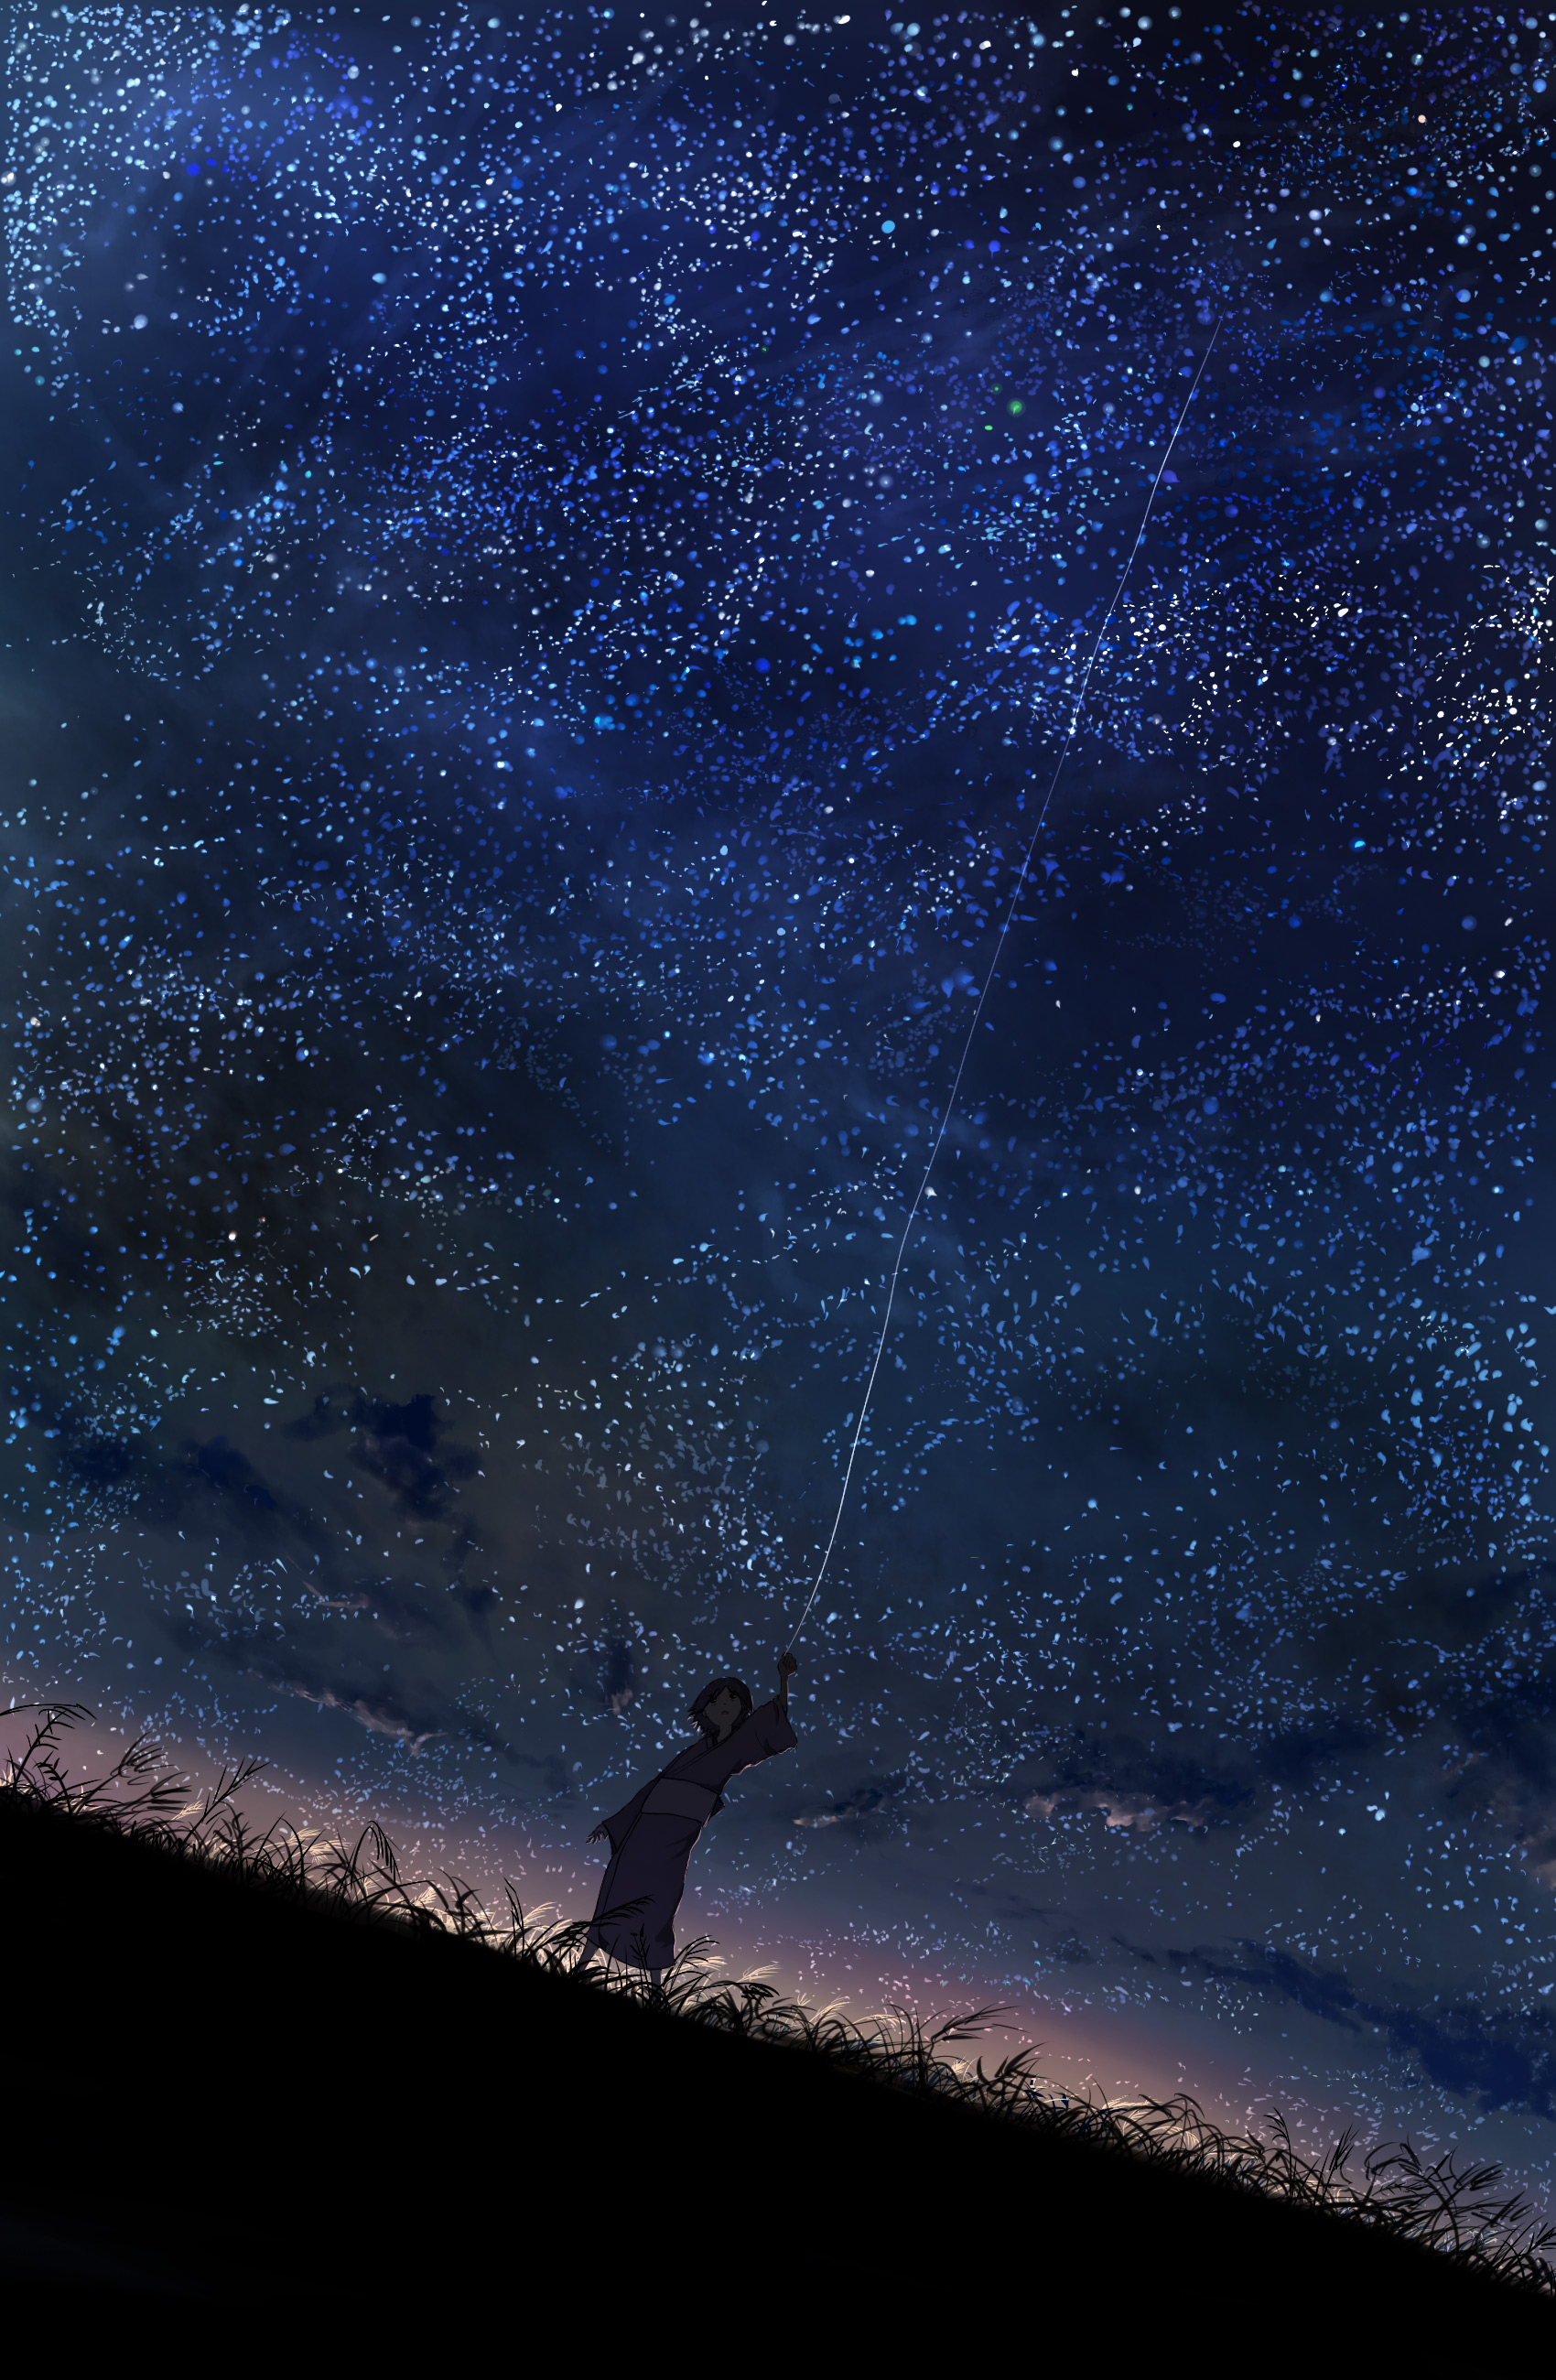 Sky Full Of Stars Wallpaper Hd - HD Wallpaper 